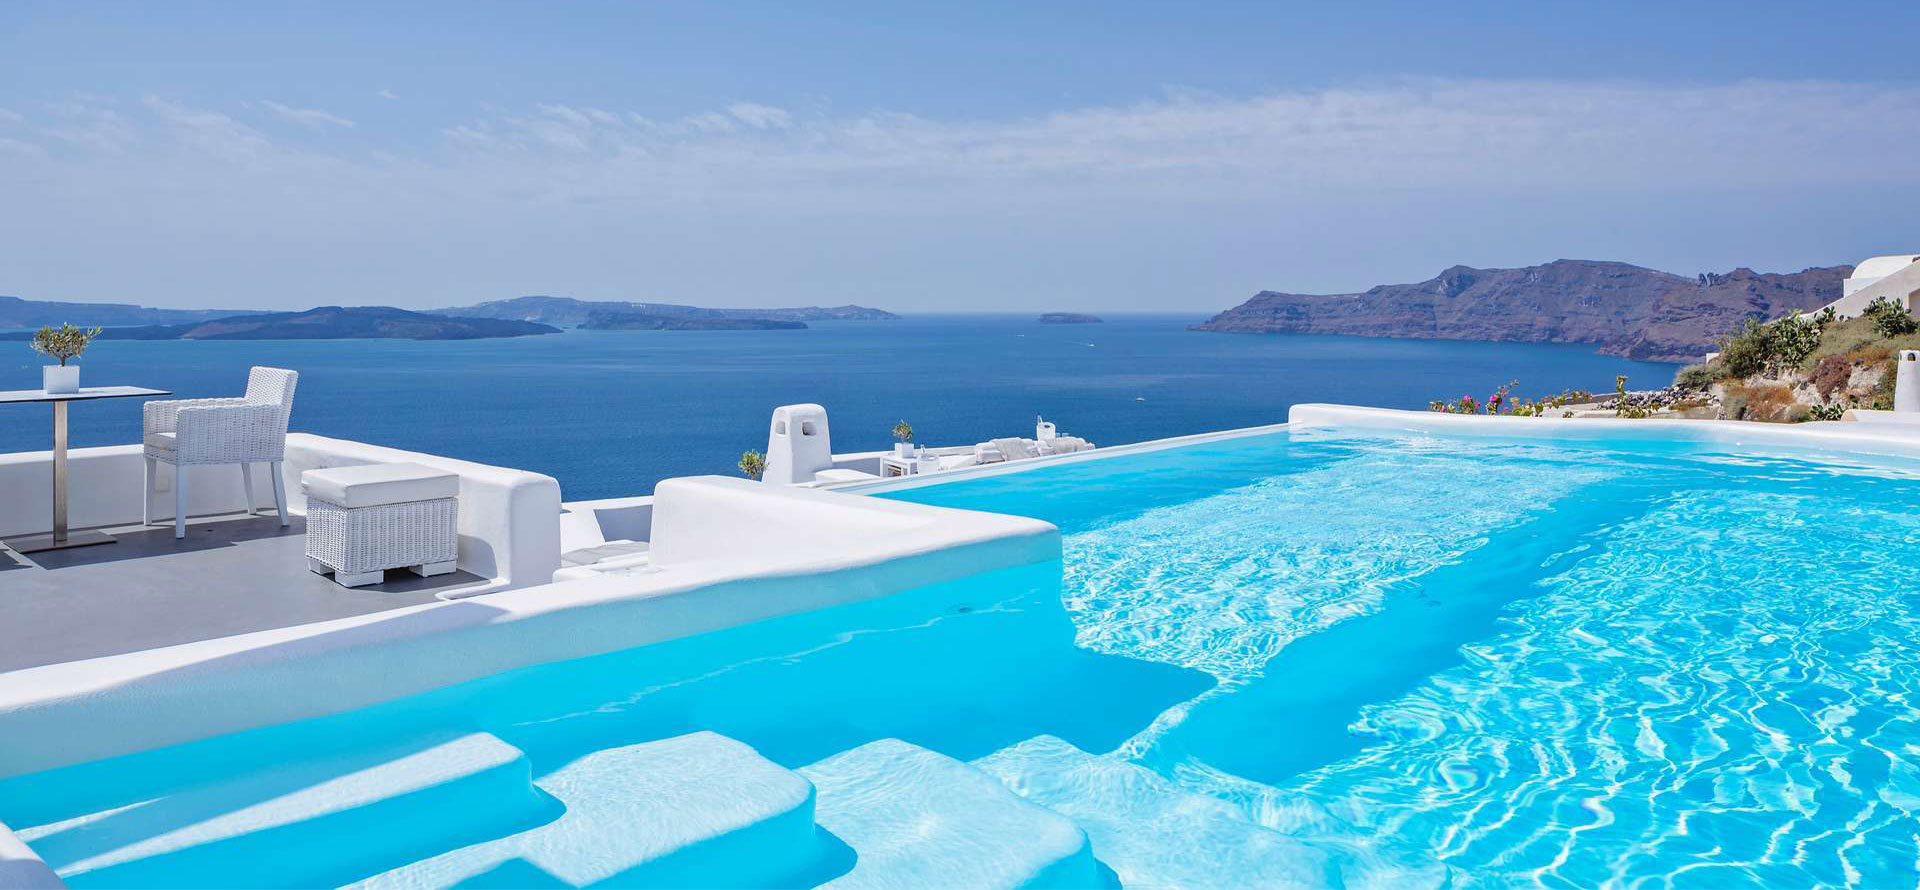 Santorini greece all inclusive resorts with swimming pool.